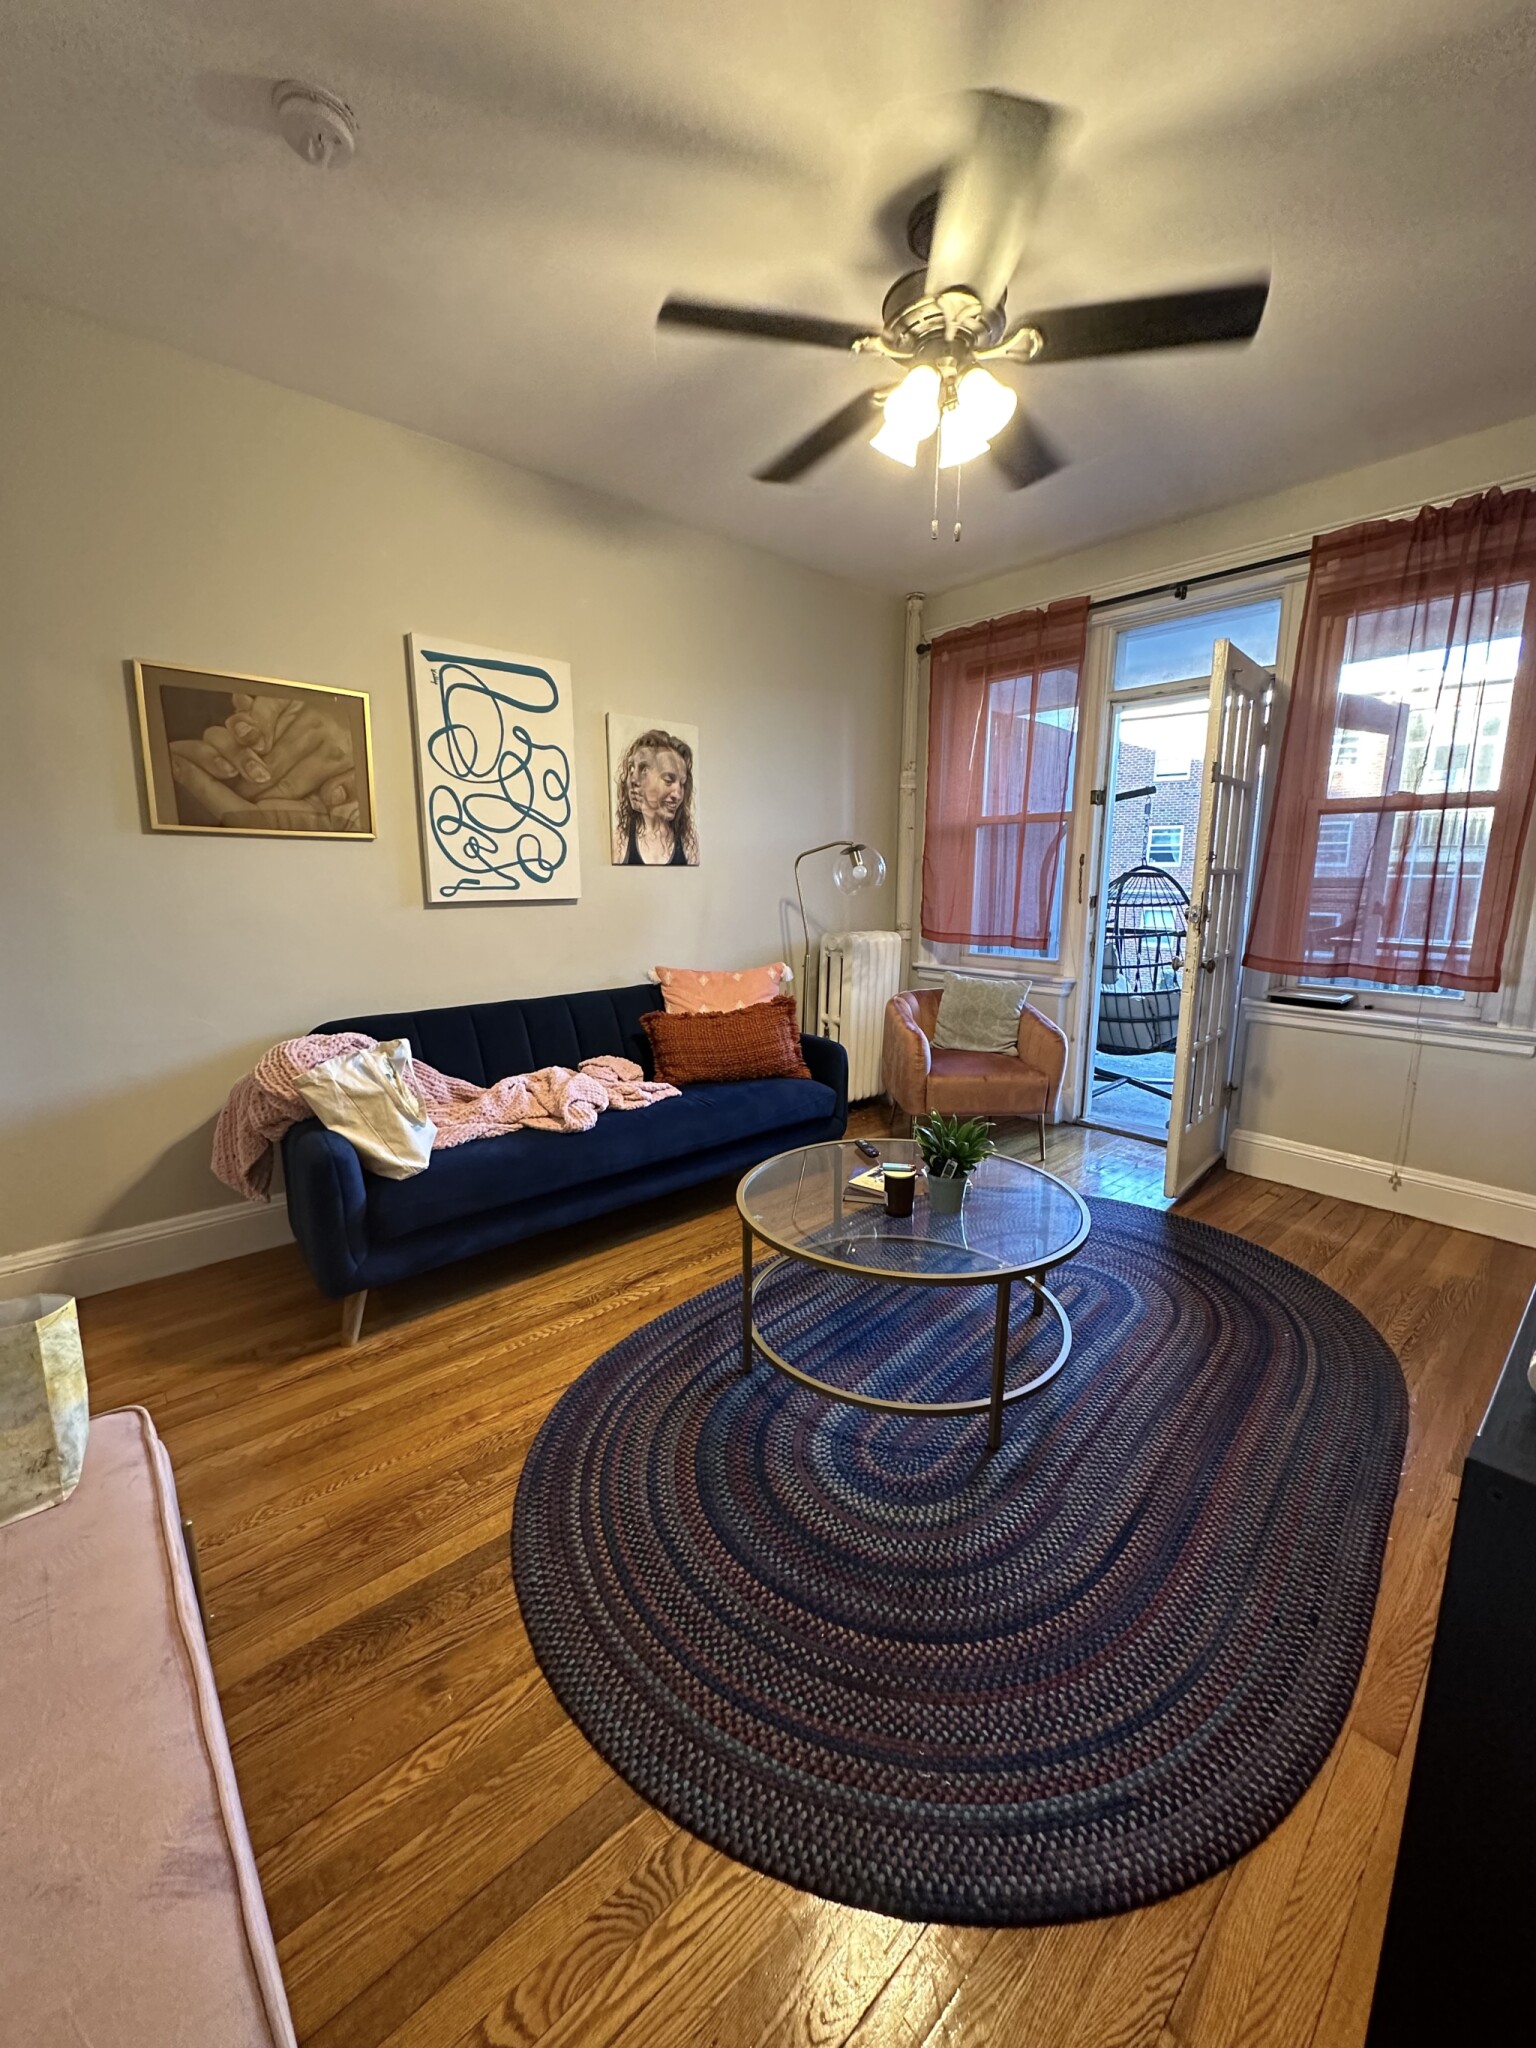 Photos of apartment on Hobson,Boston MA 02135